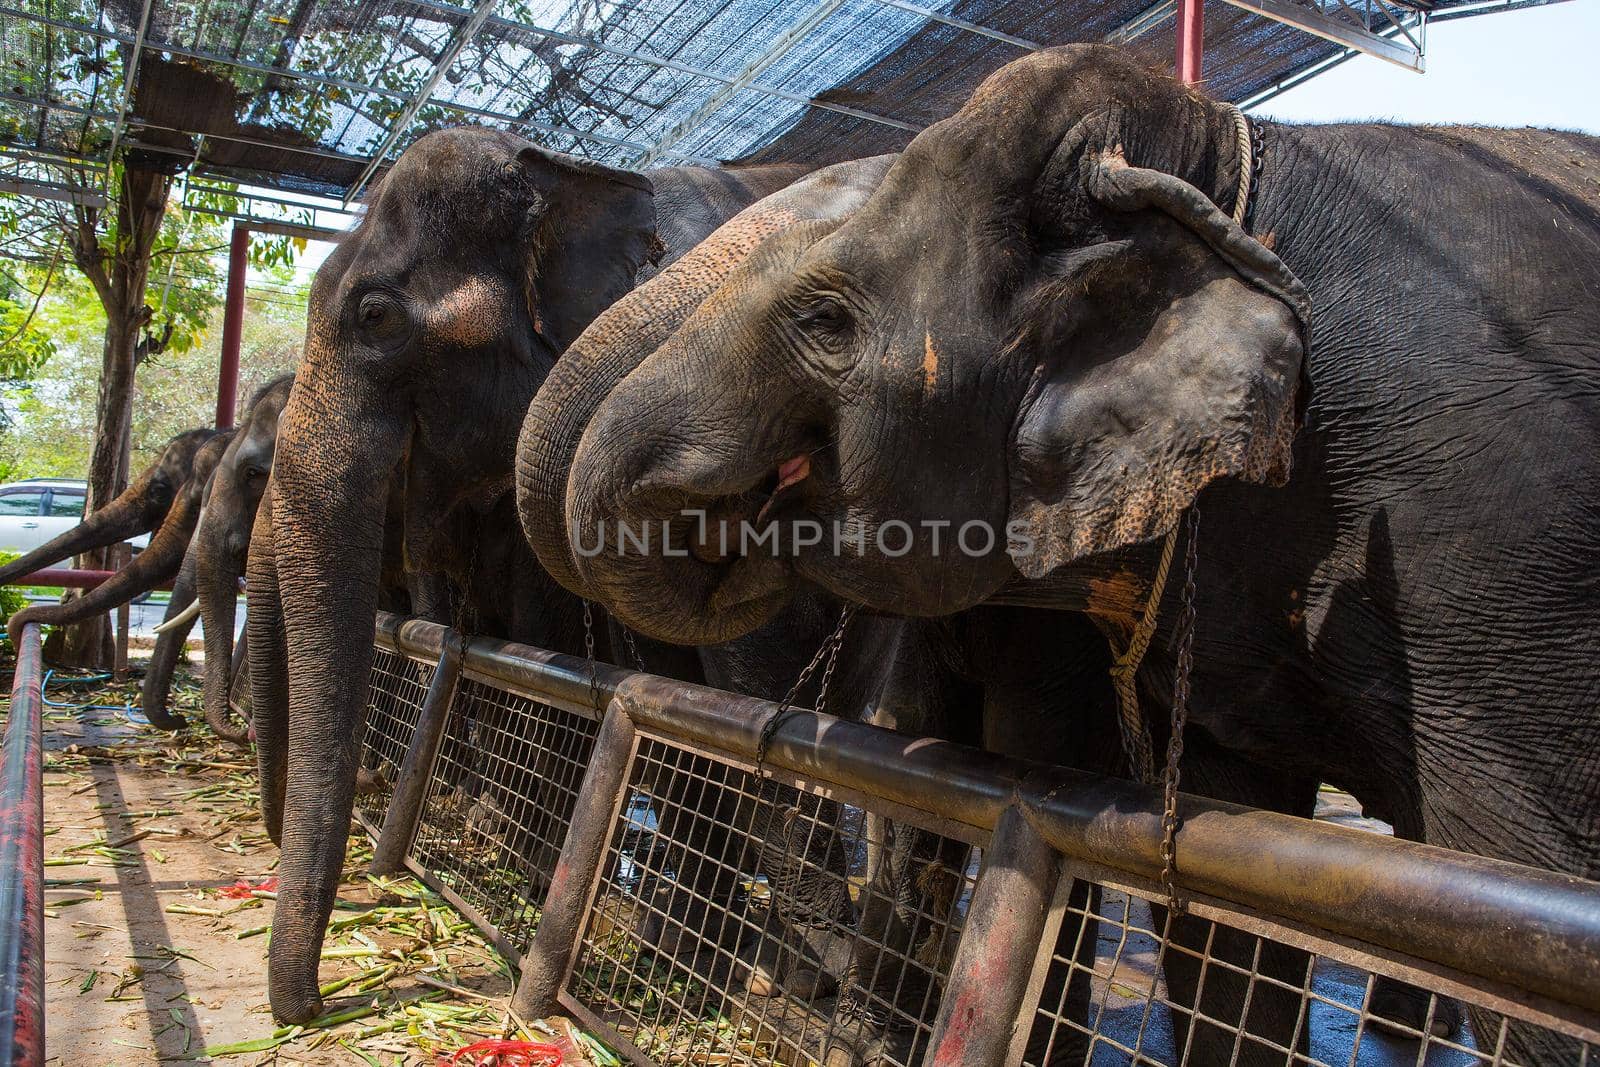 Several elephants show in Phra Nakhon Si Ayutthaya Province, Thailand.